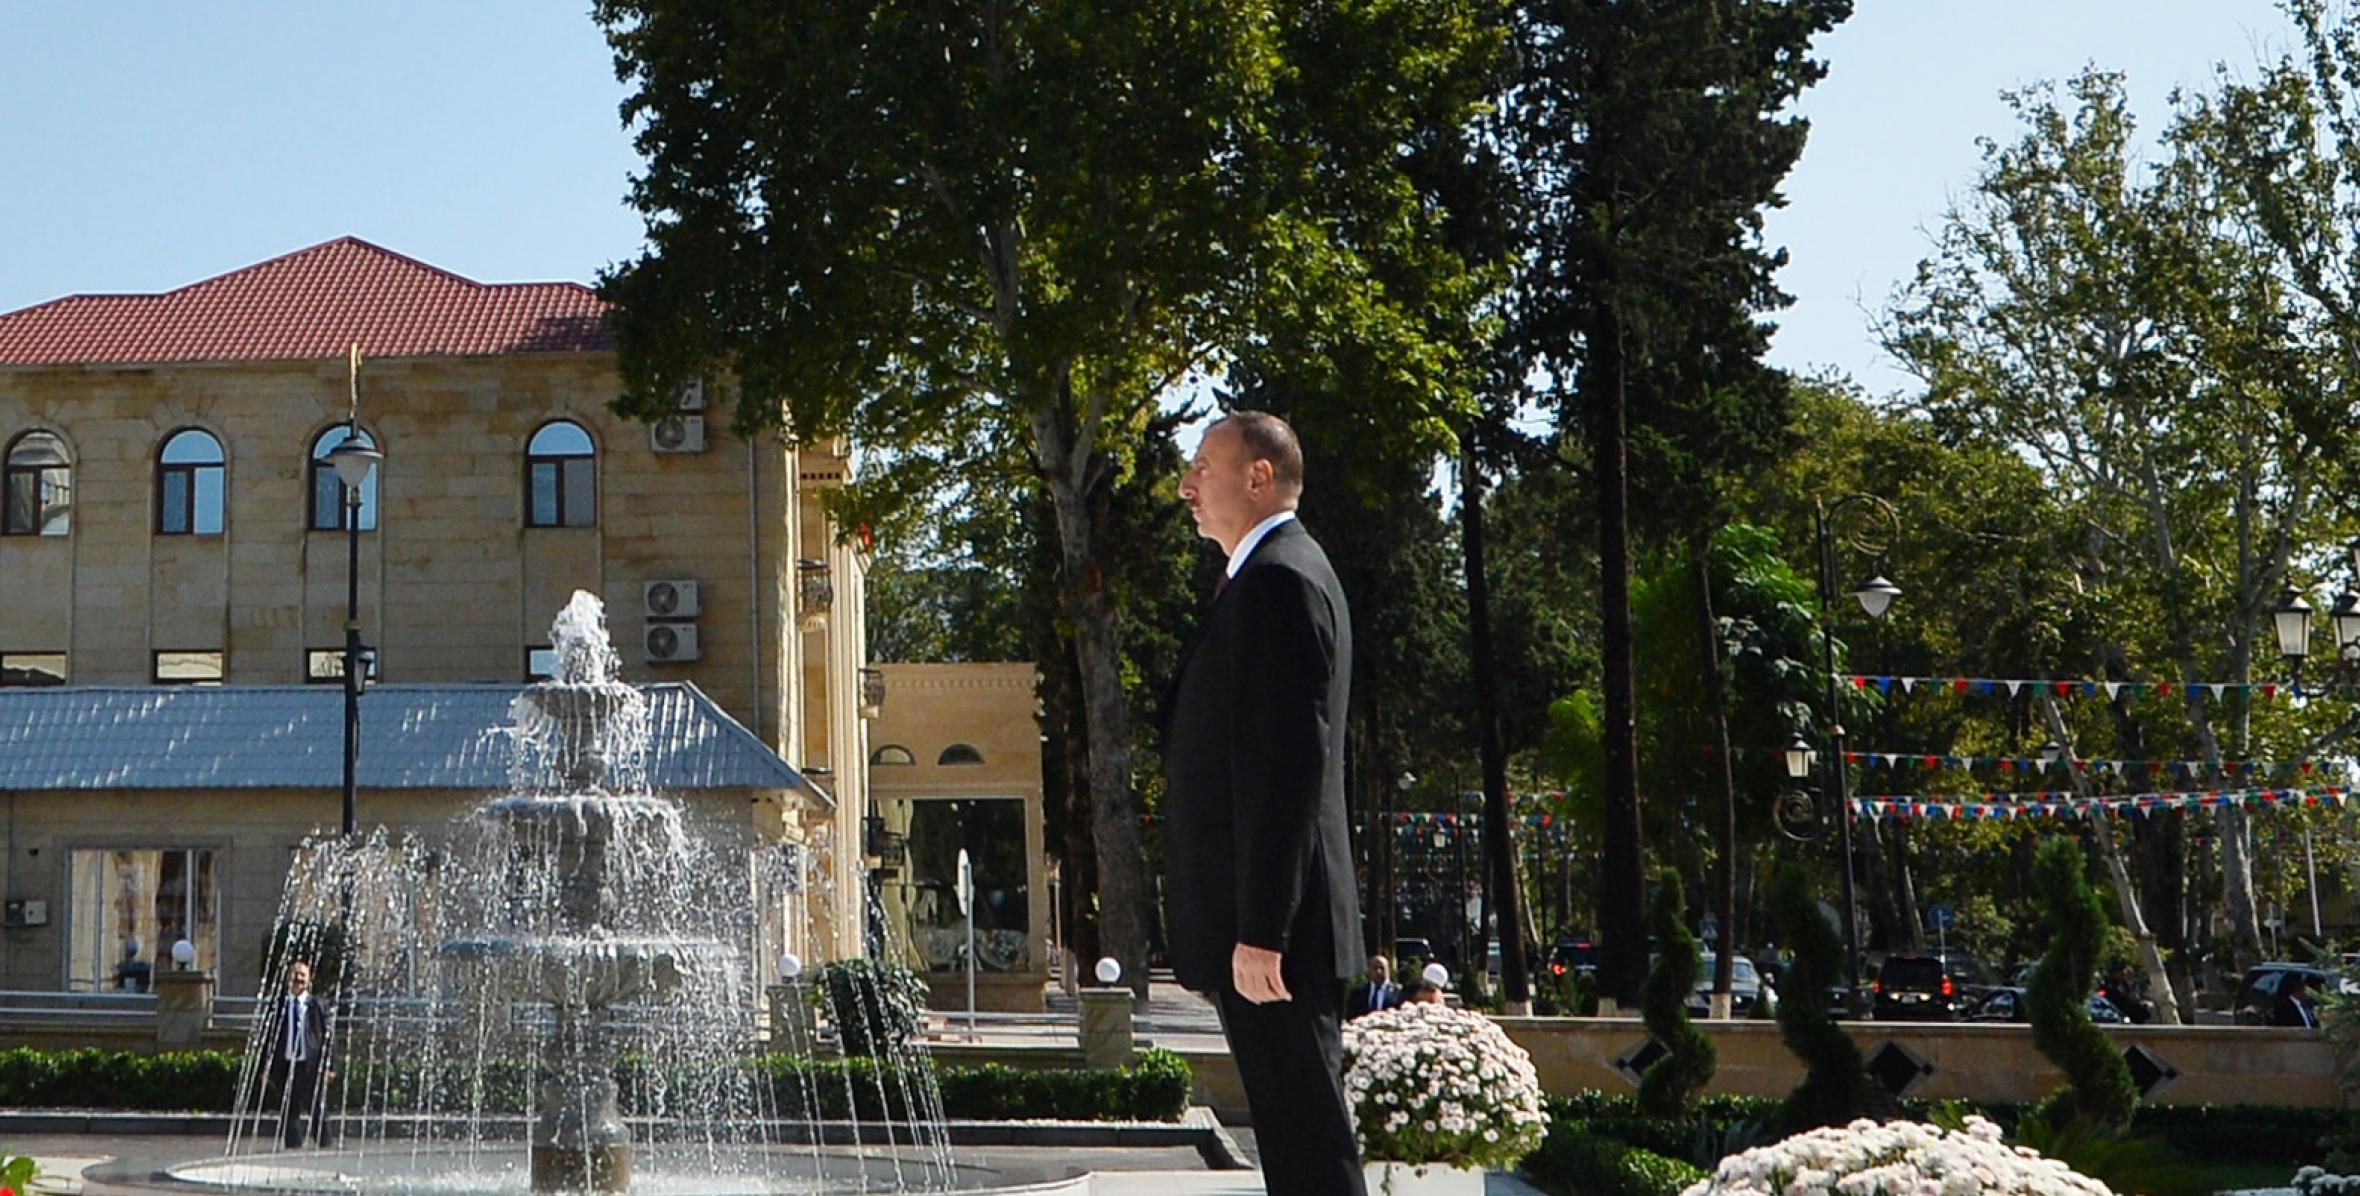 Ilham Aliyev visited a statue of national leader Heydar Aliyev in Goychay